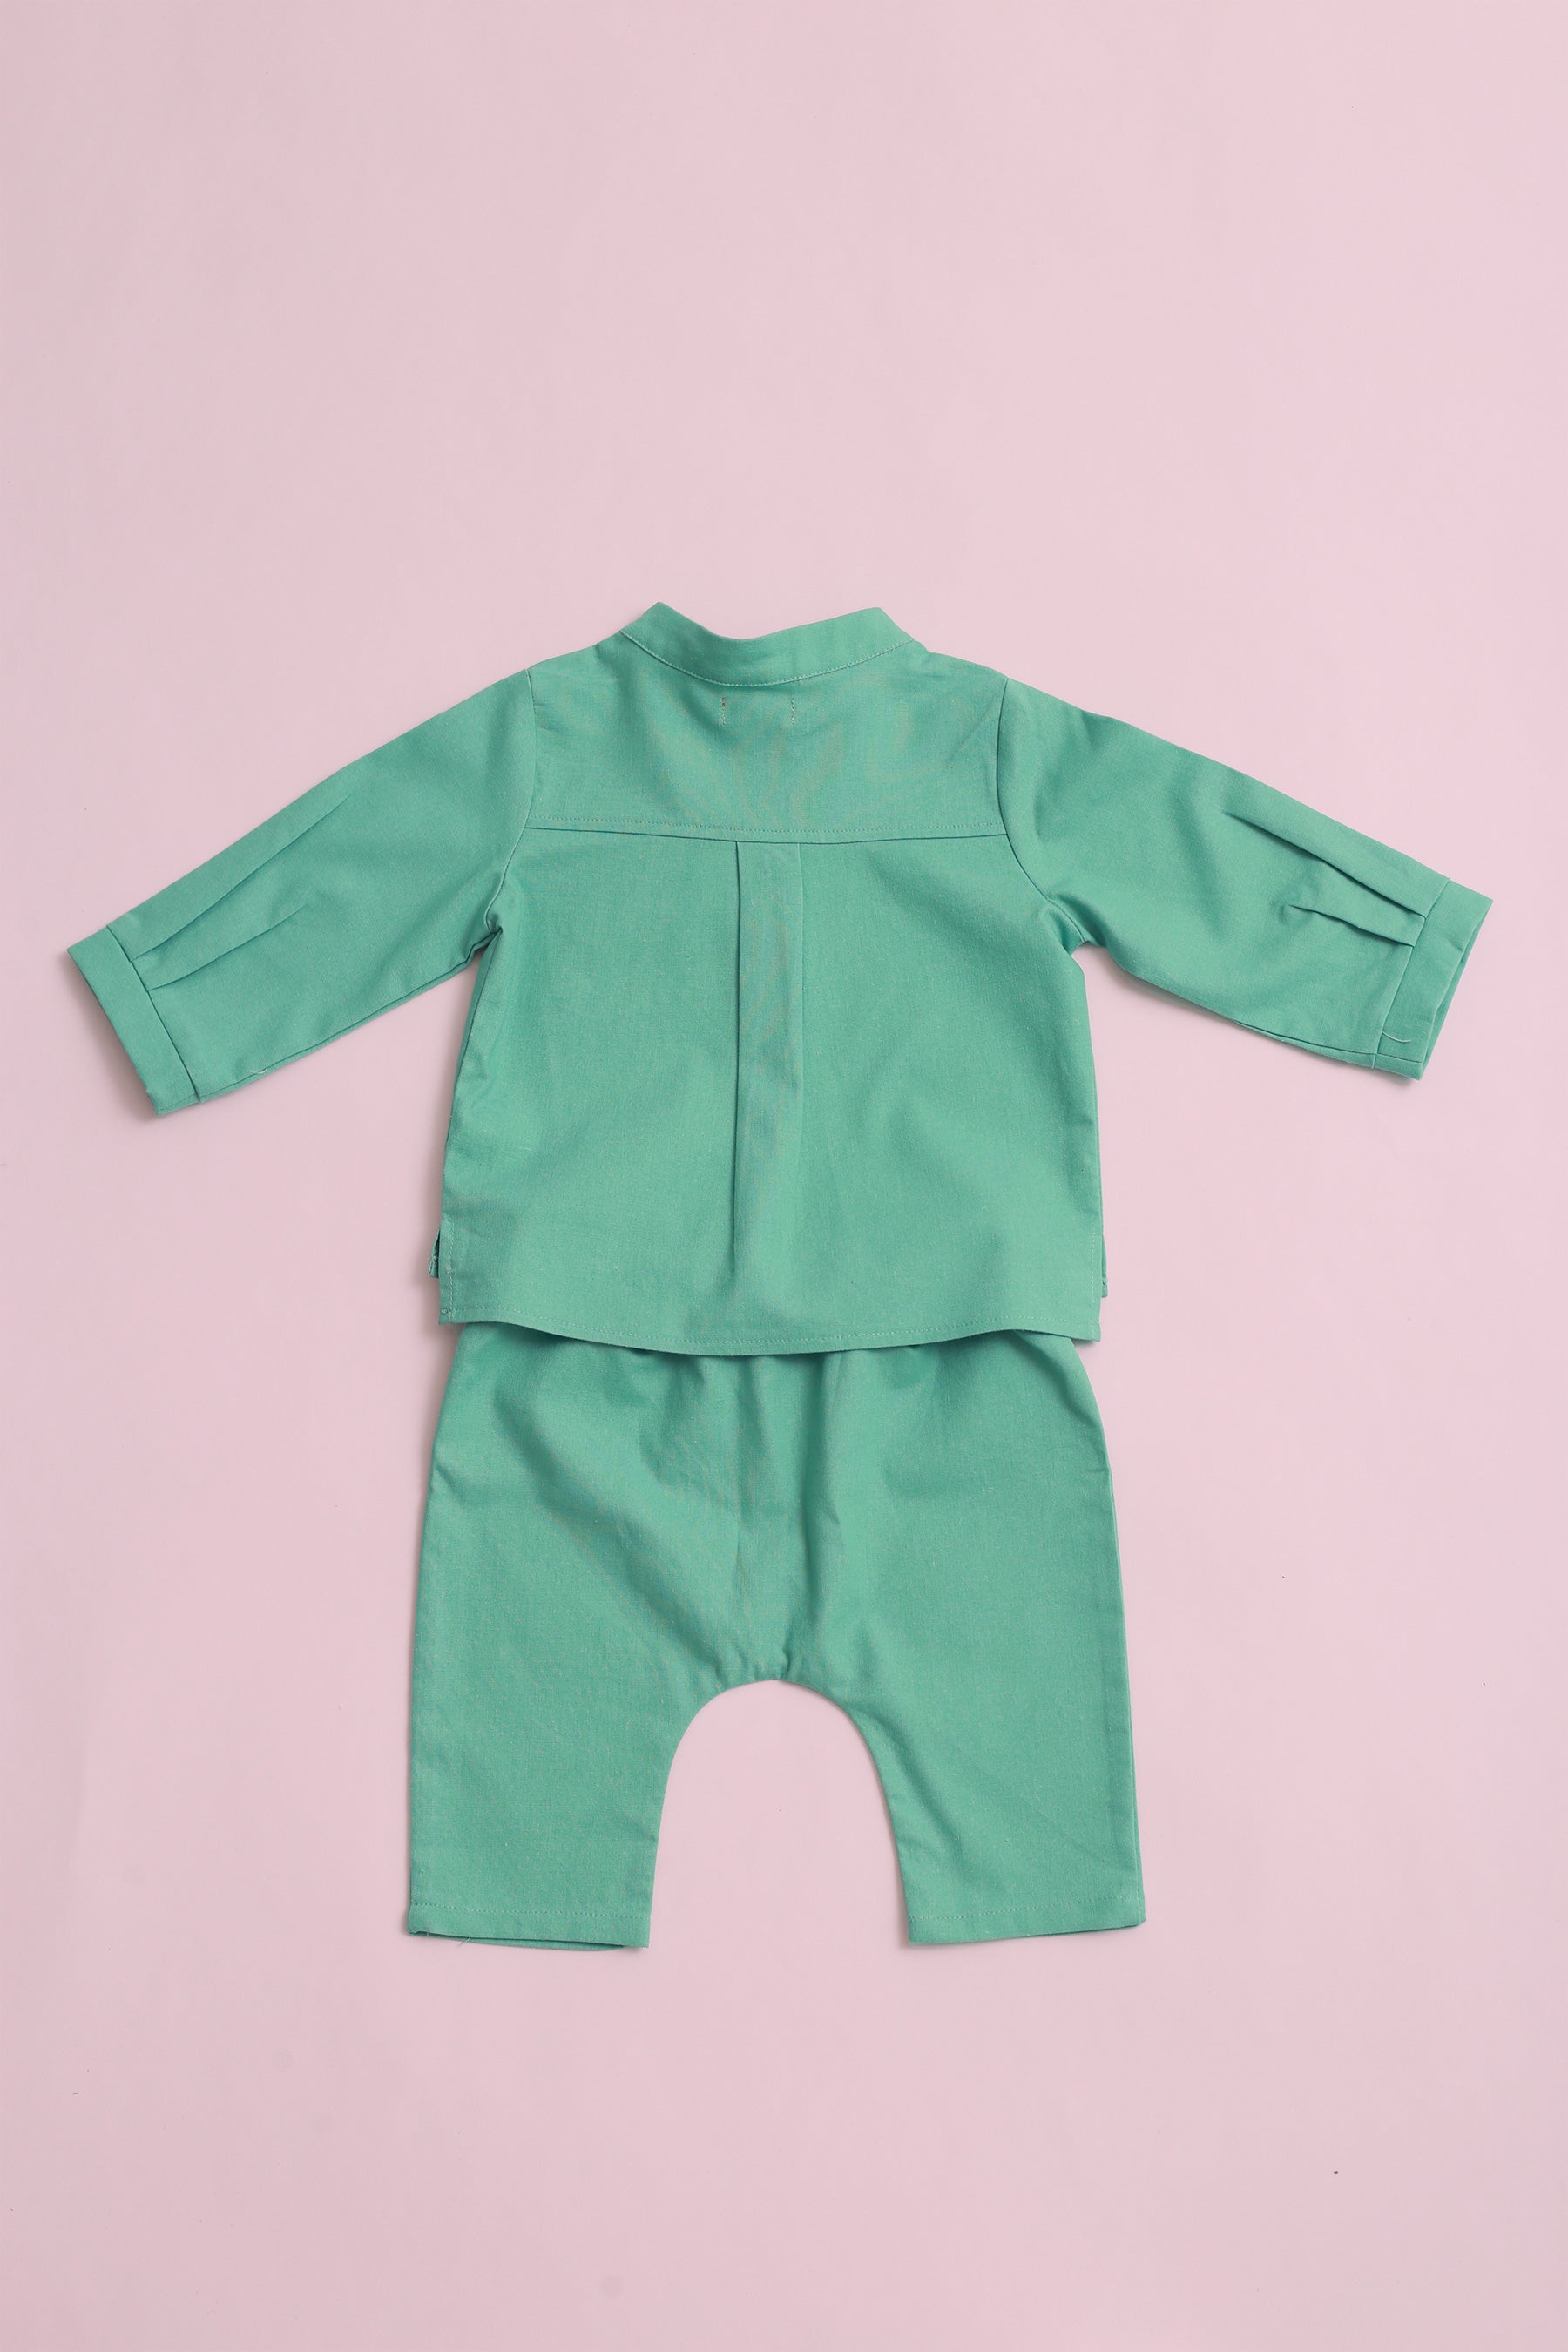 The Nikmat Collection Baby Baju Melayu Set Tiffany